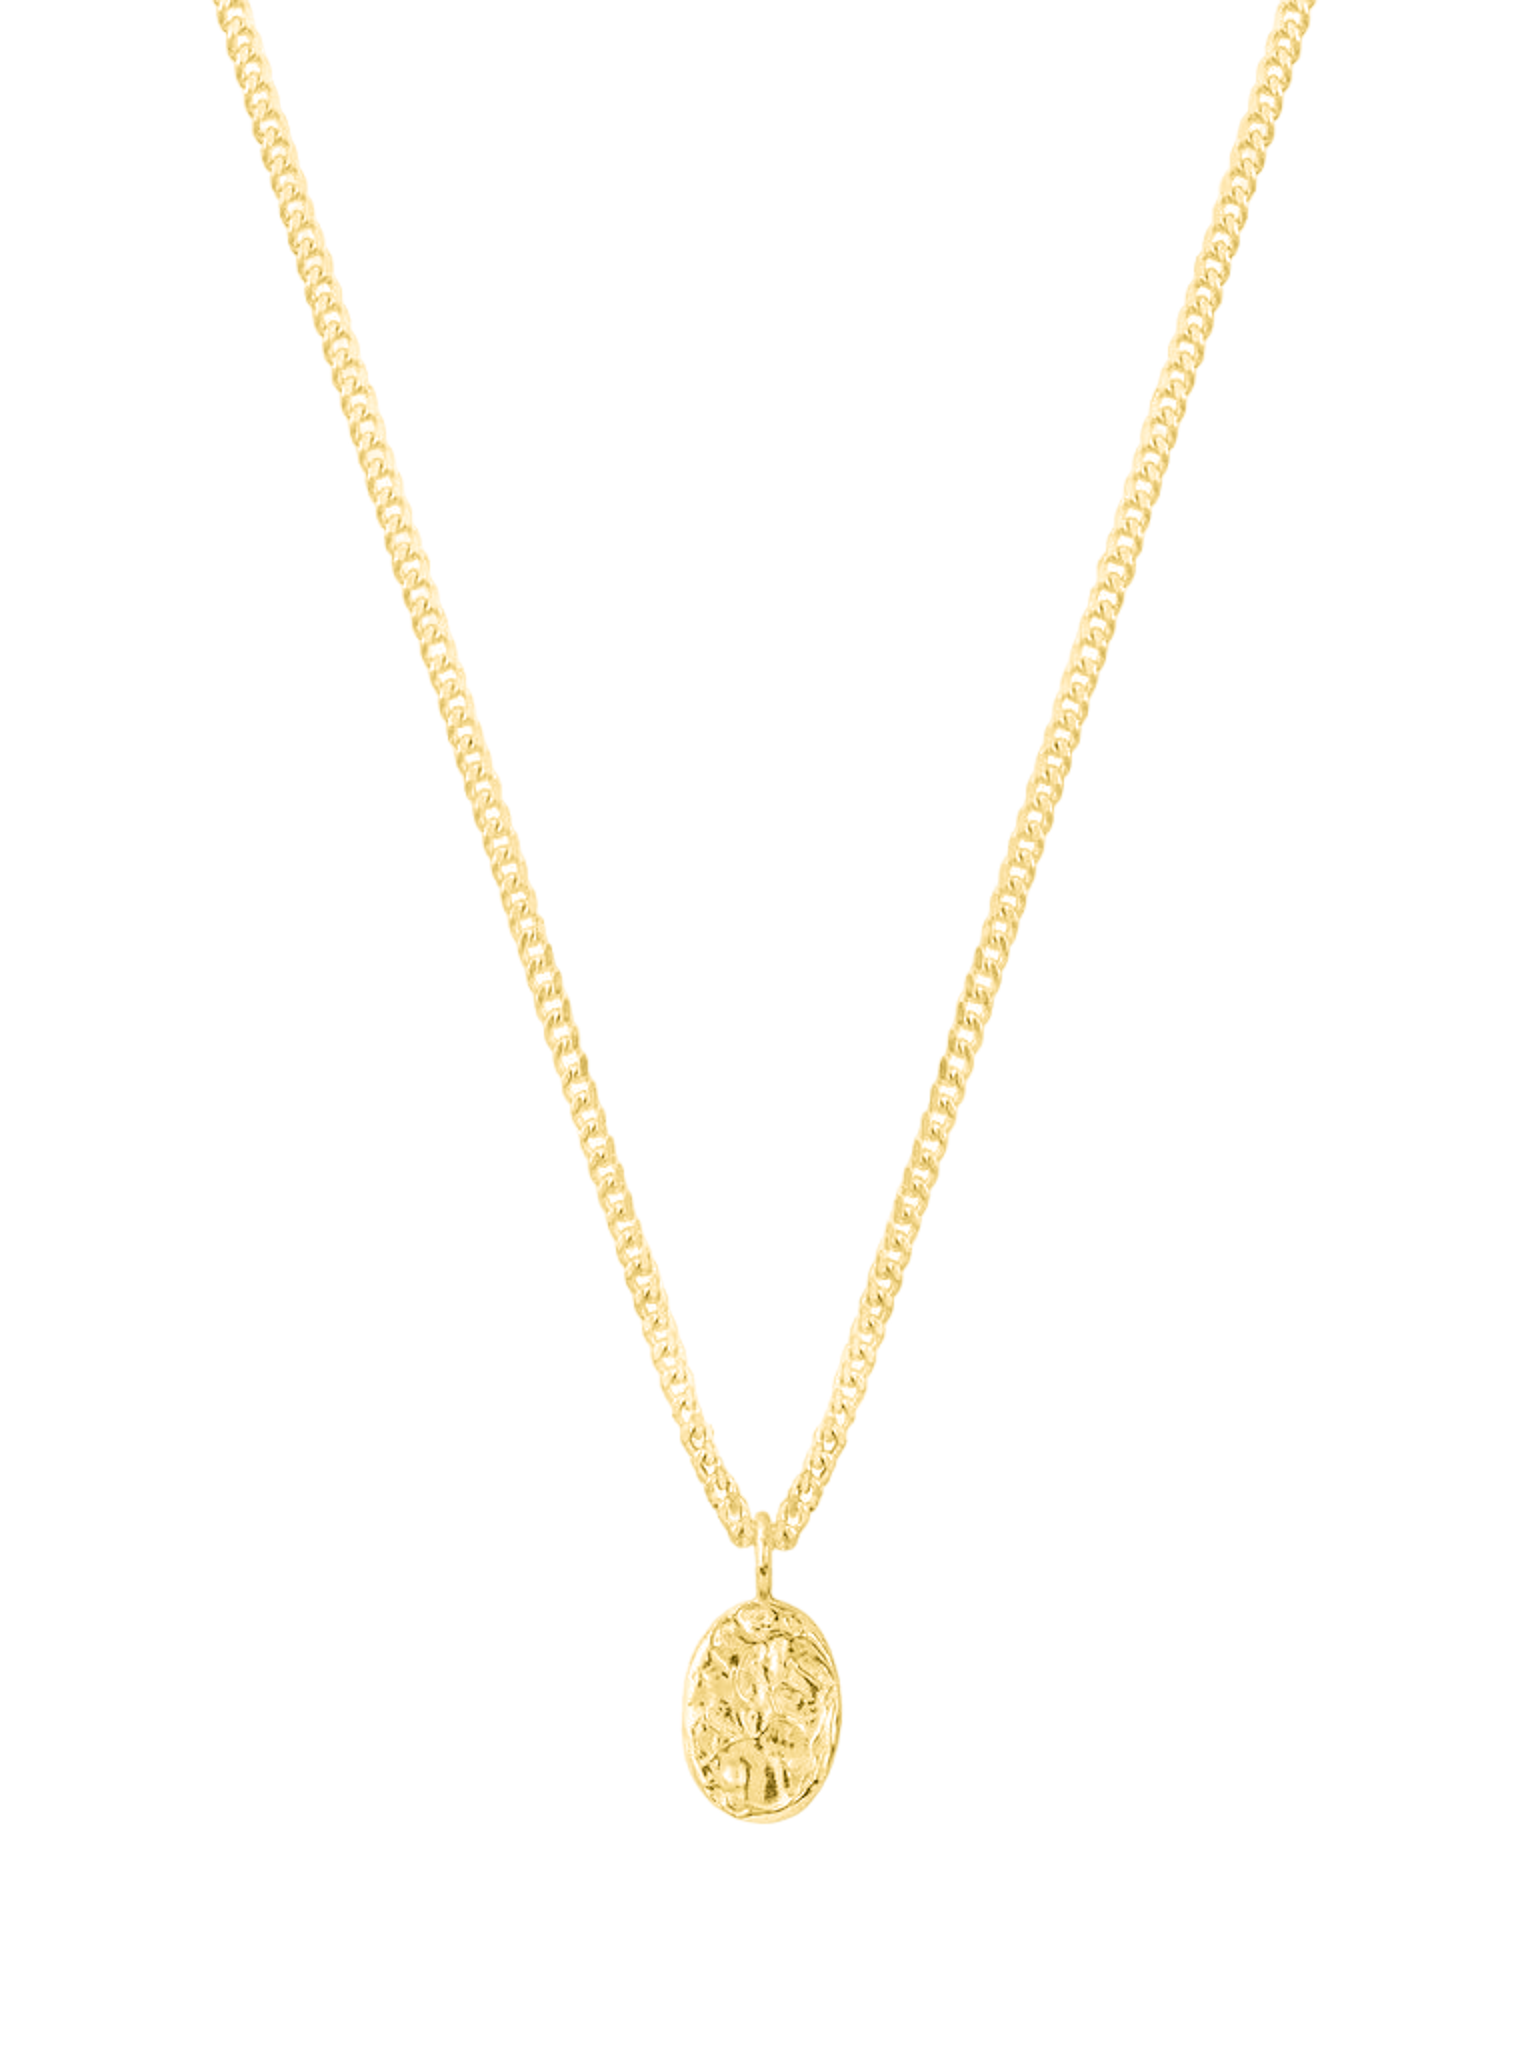 Organic oval pendant necklace